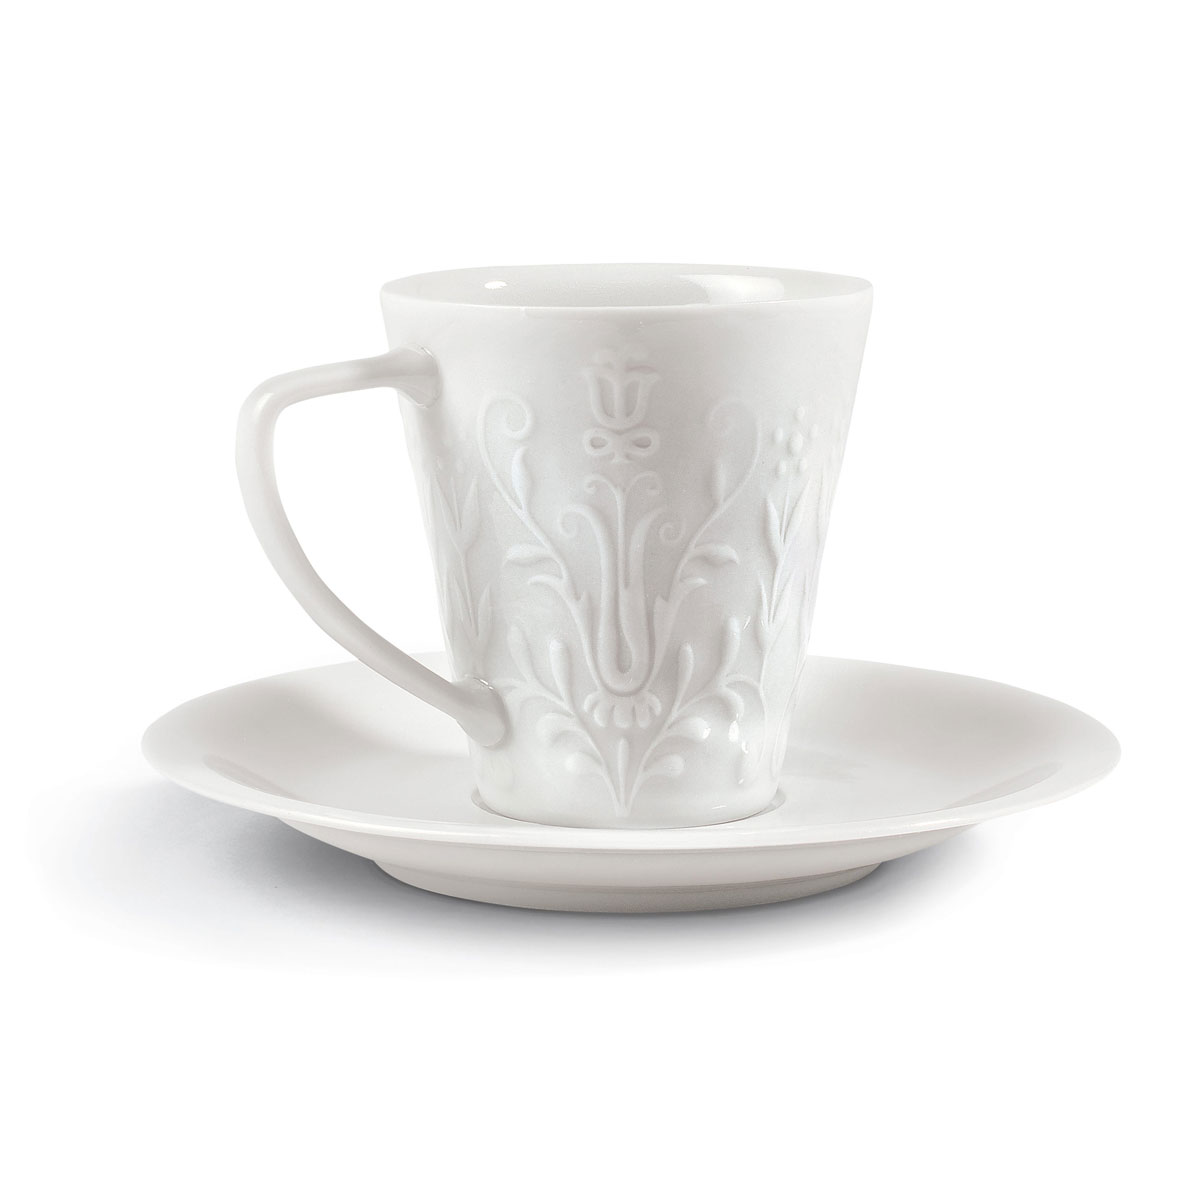 Lladro Art Of The Table, Logos Tea Cups